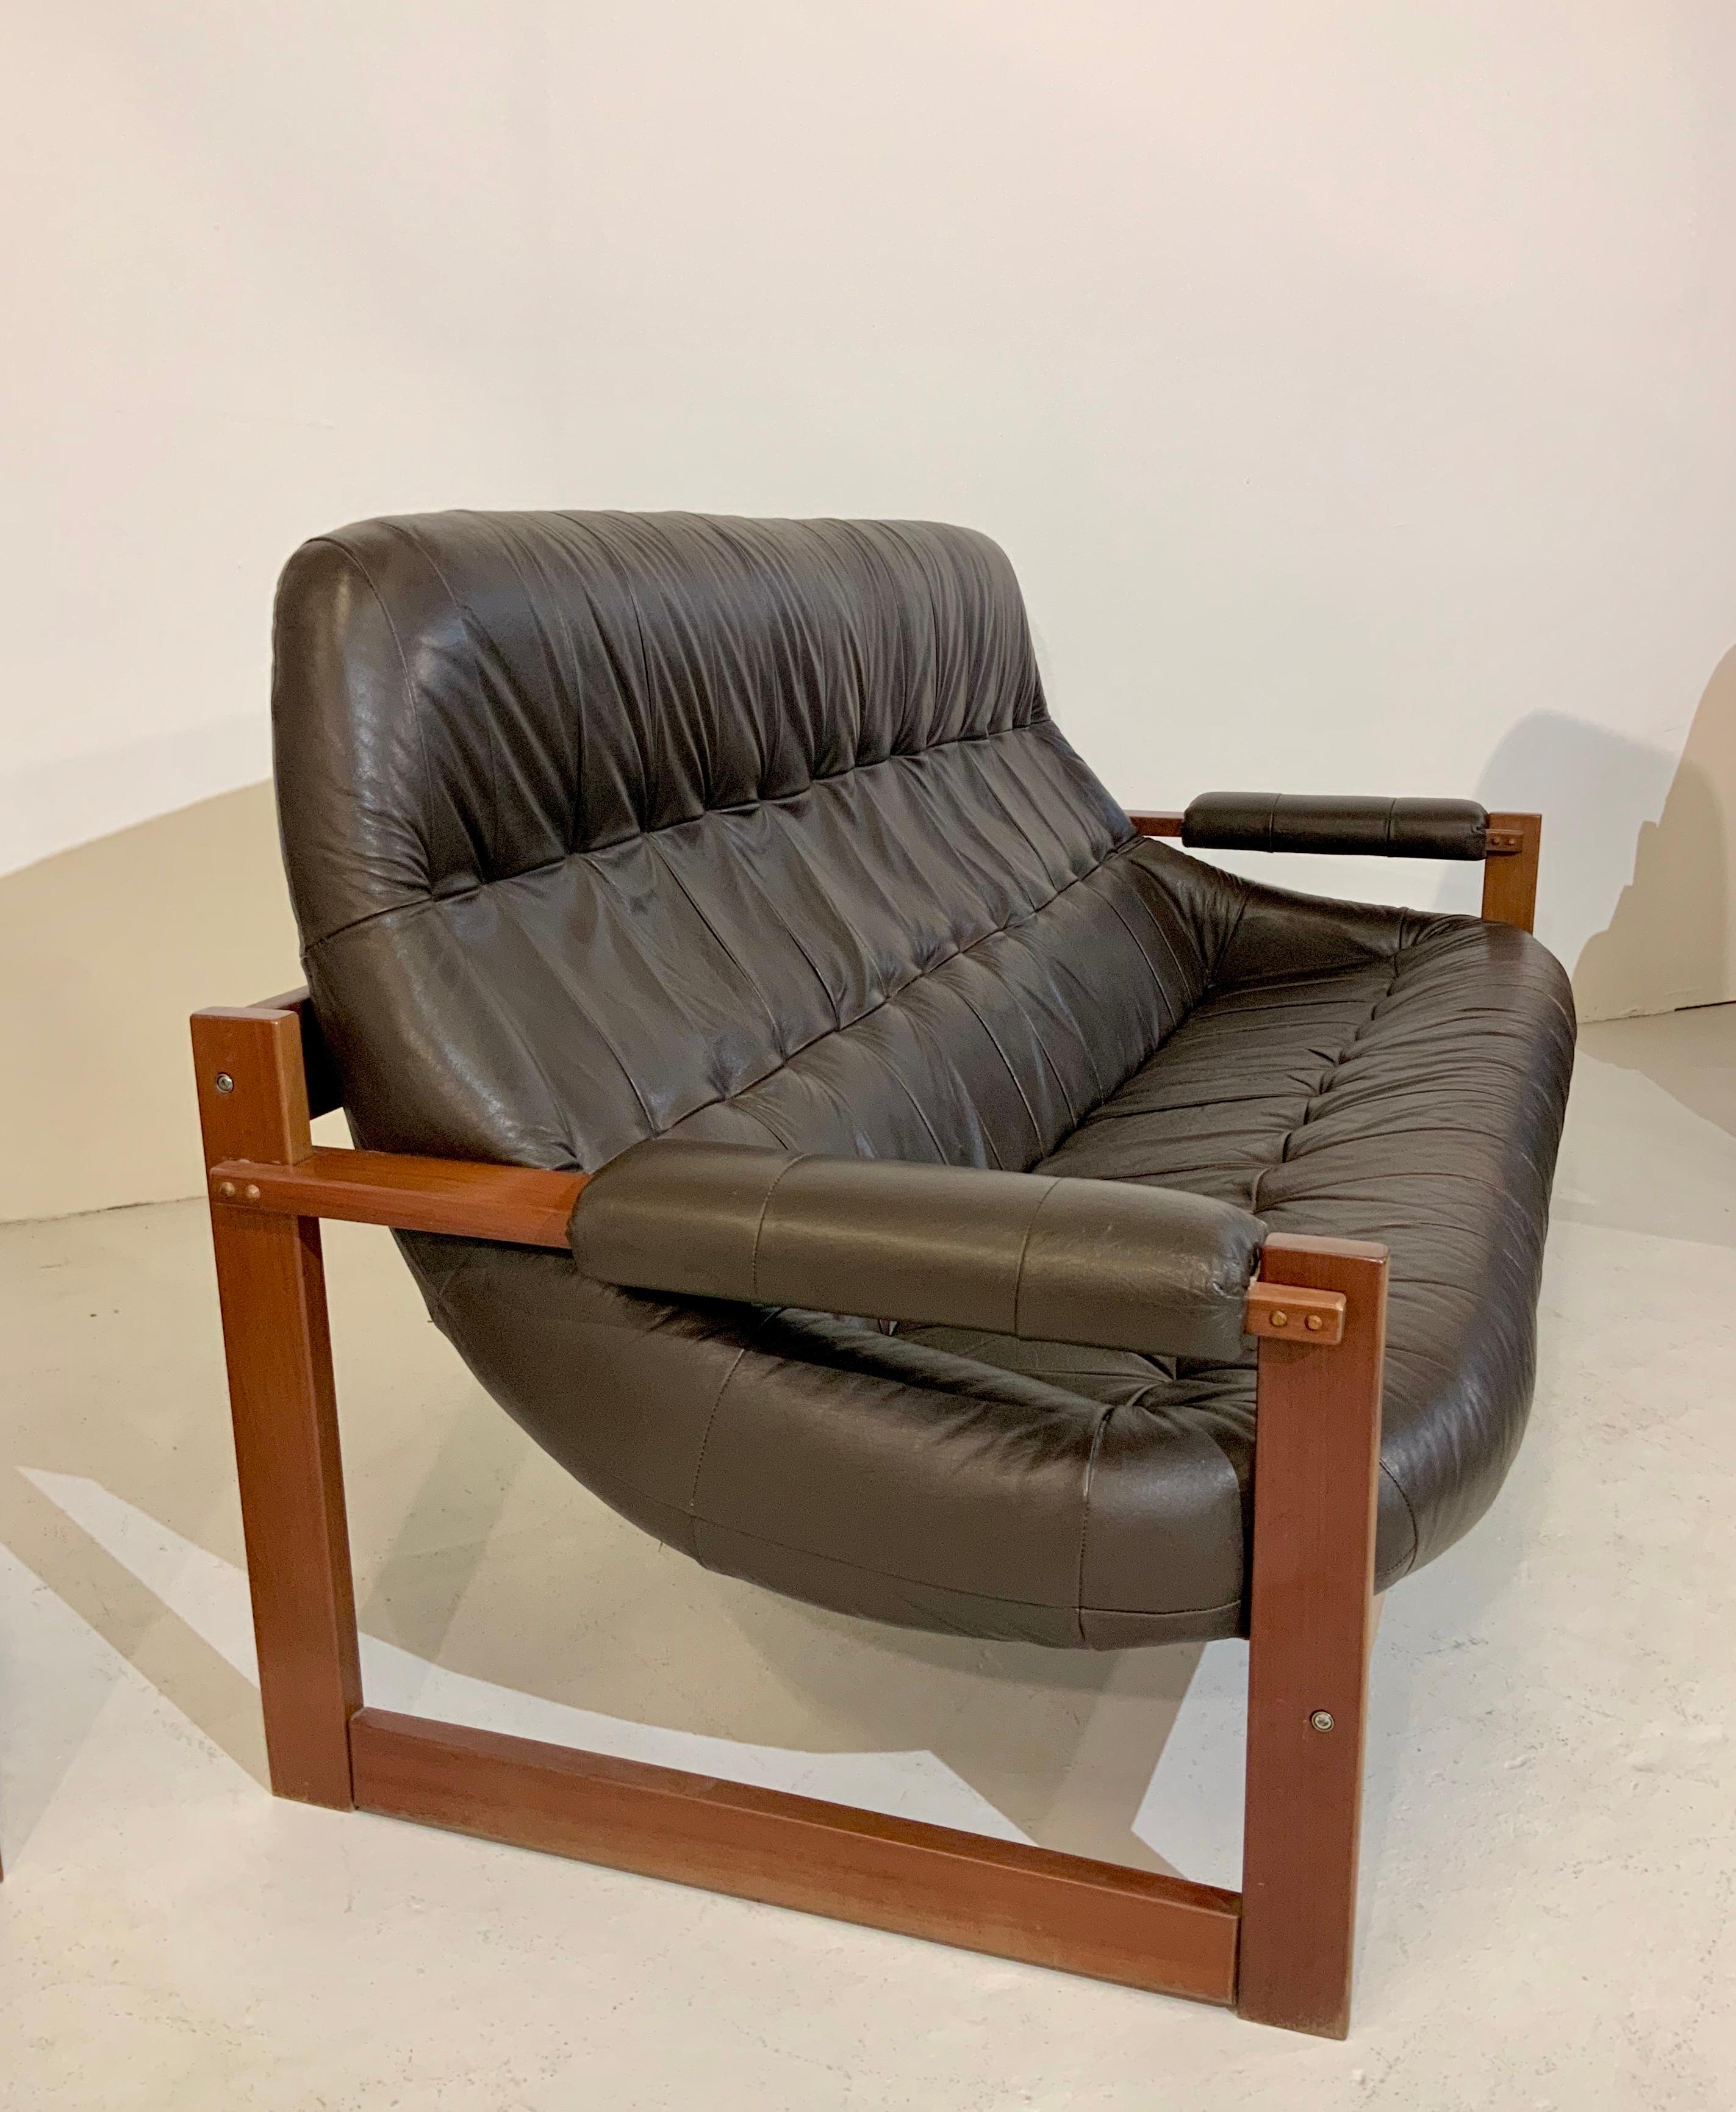 Percival Lafer Brazilian Mid-Century Modern Design Leather Living Room Set 1970s For Sale 5